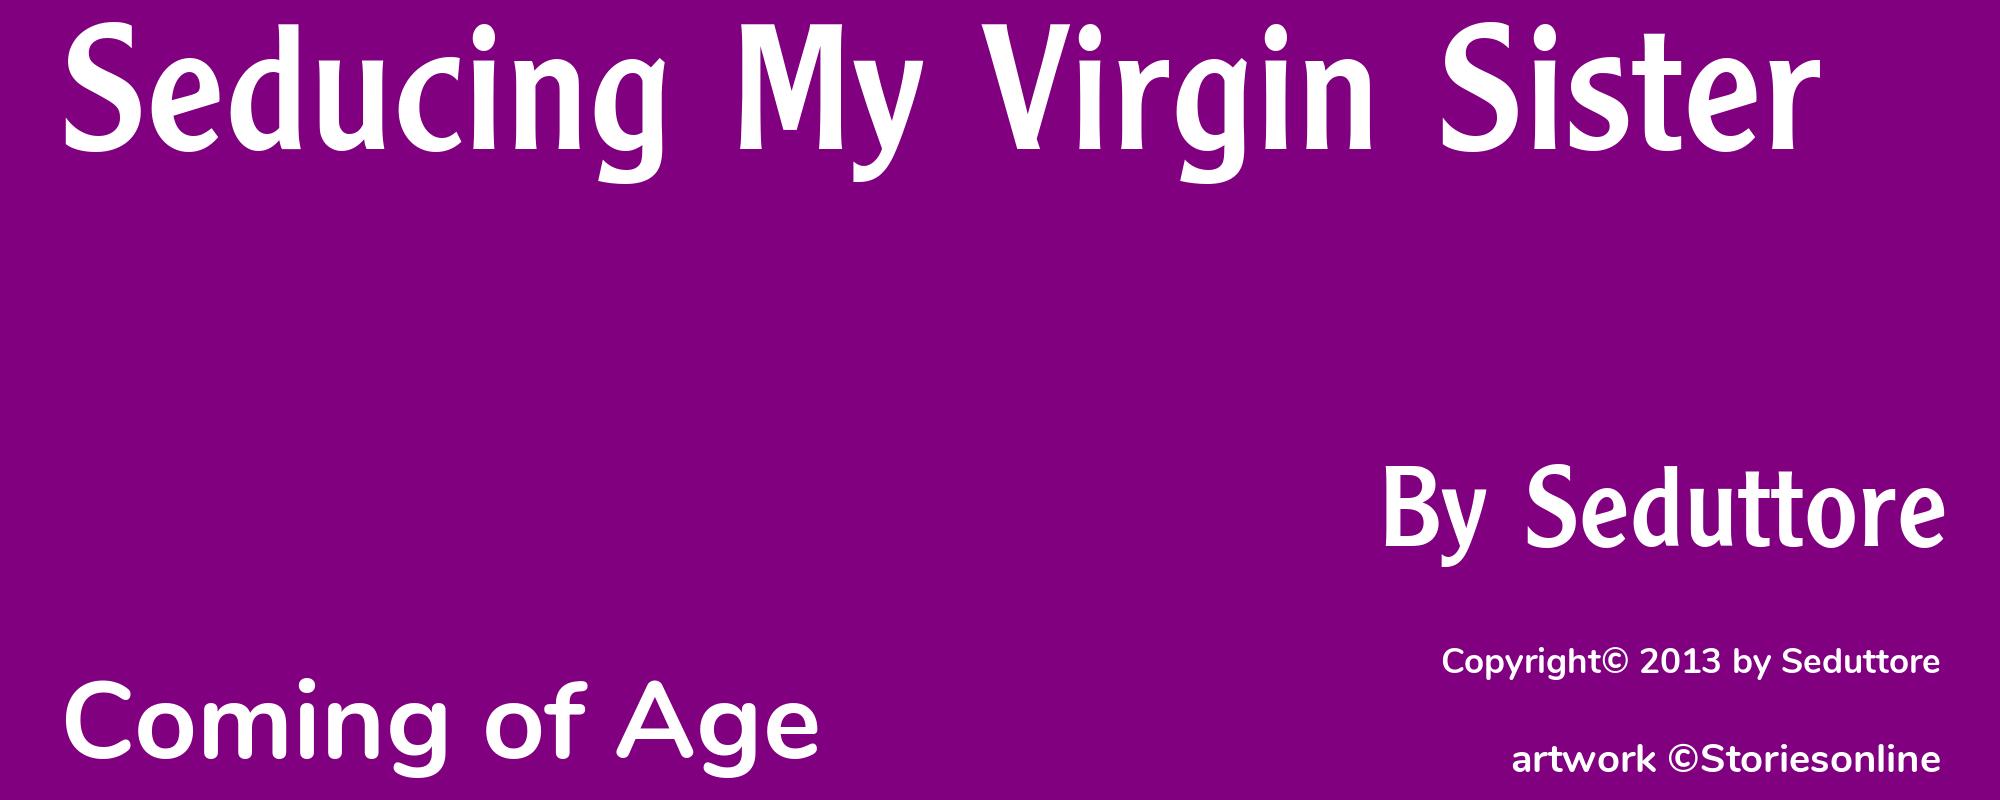 Seducing My Virgin Sister - Cover